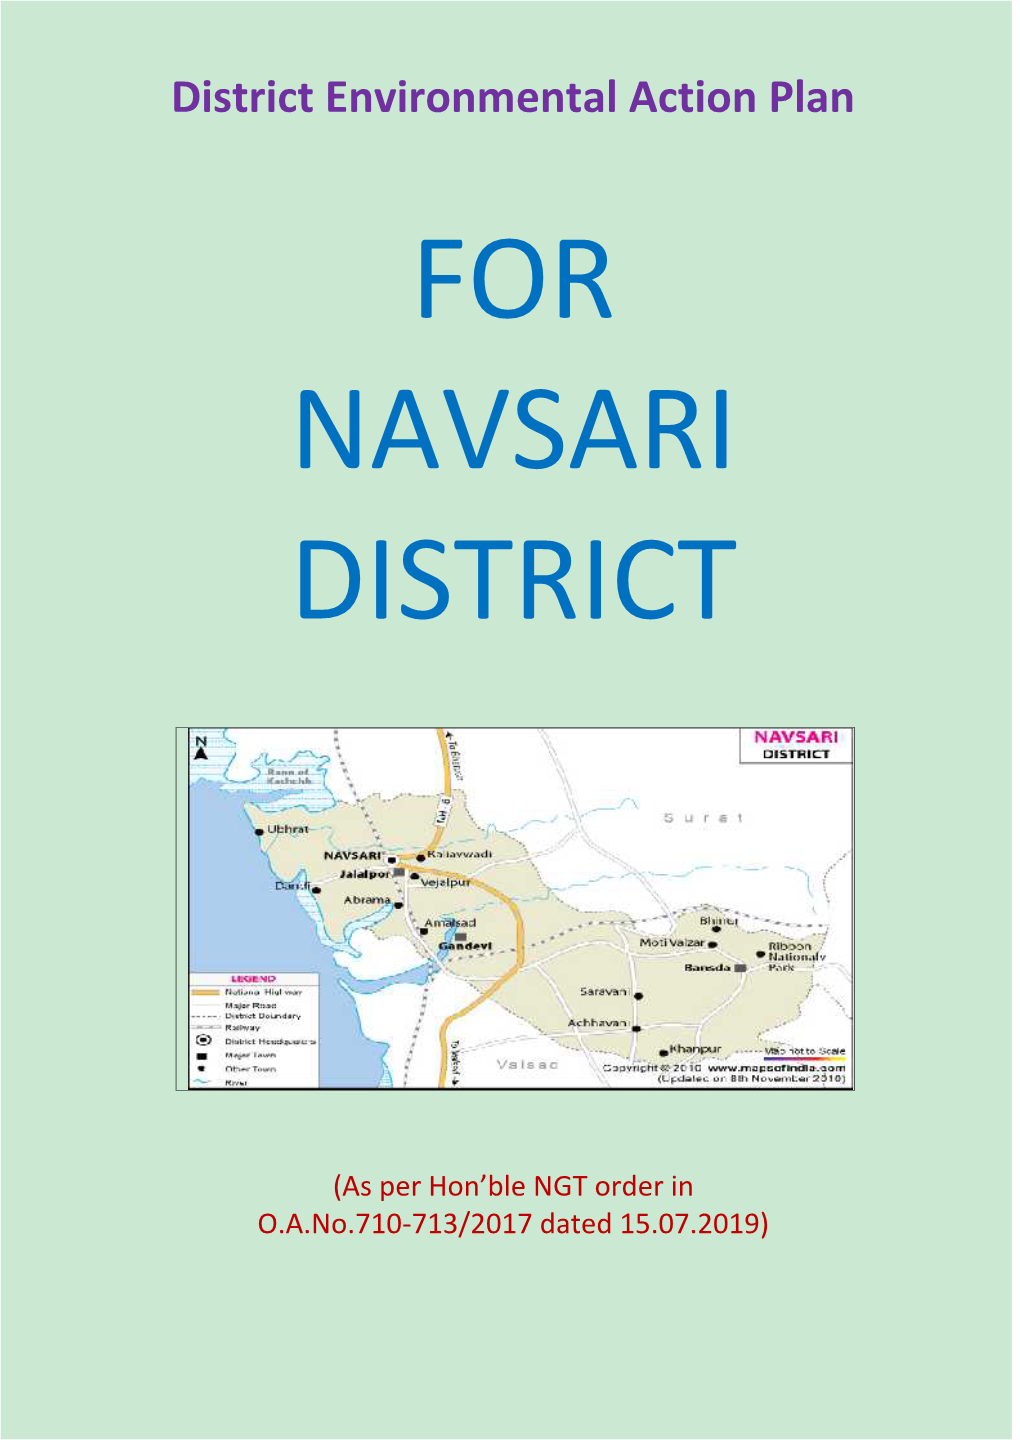 Waste Management: District Environmental Action Plan for NAVSARI DISTRICT